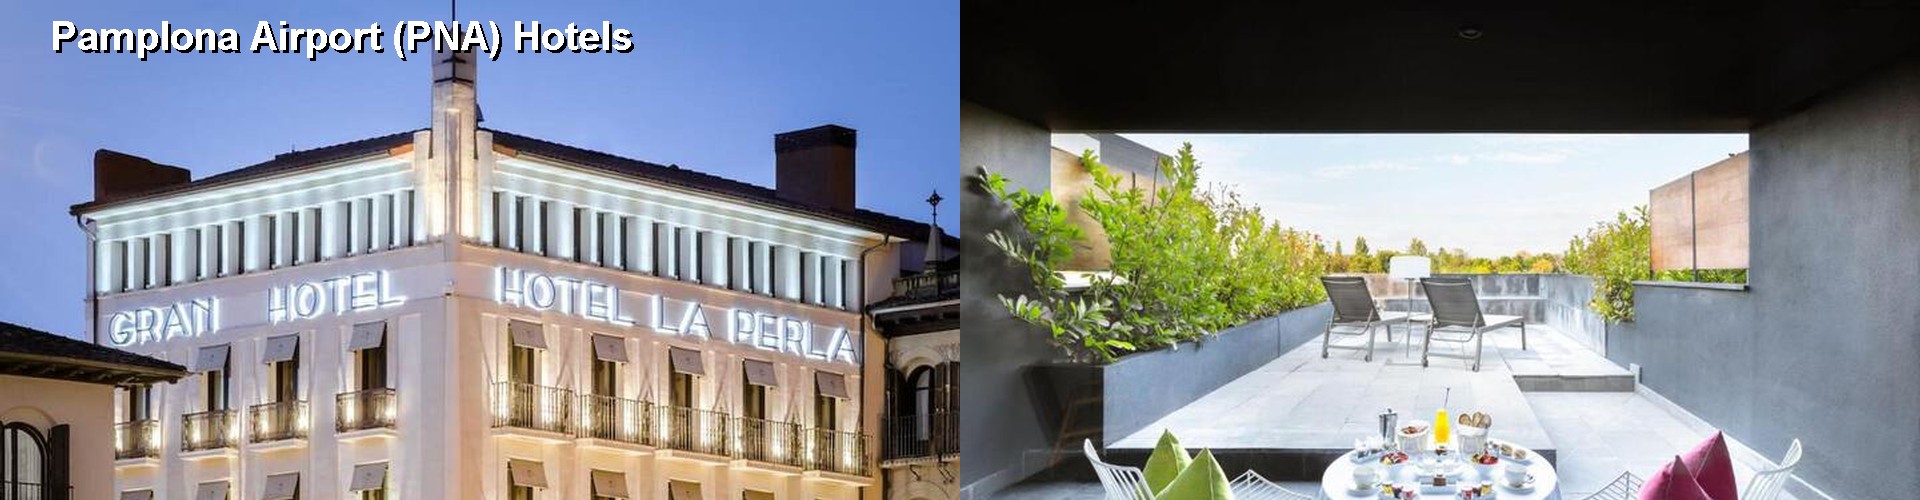 5 Best Hotels near Pamplona Airport (PNA)